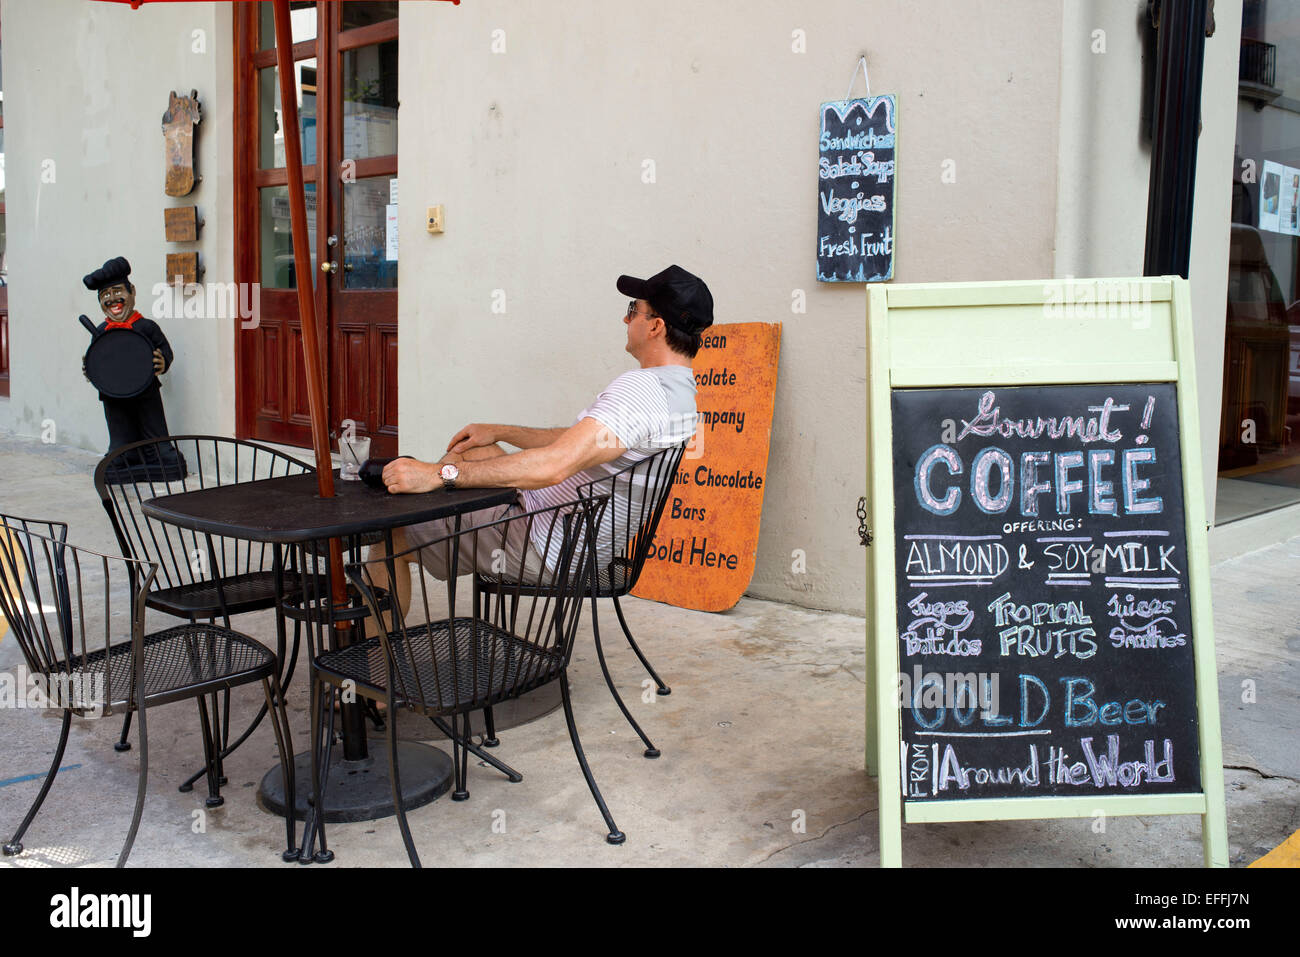 Snack-bar Kaffee-Restaurant im alten Panama City, Panama, Mittelamerika. Traditionelles Essen. Panama Viejo Altstadt als aufgeführt Stockfoto